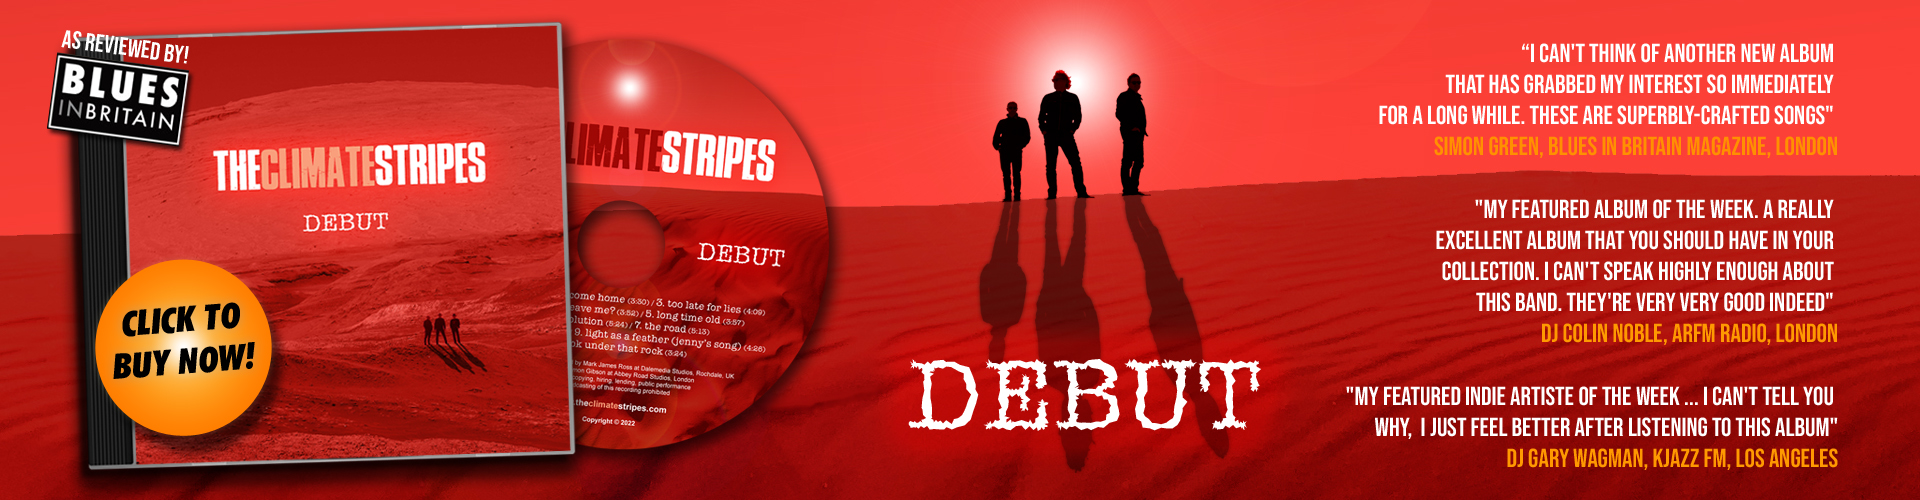 Buy our brand new album 'DEBUT' today! Ten outstanding original blues / rock tracks. Just £9.99 inc P&P!